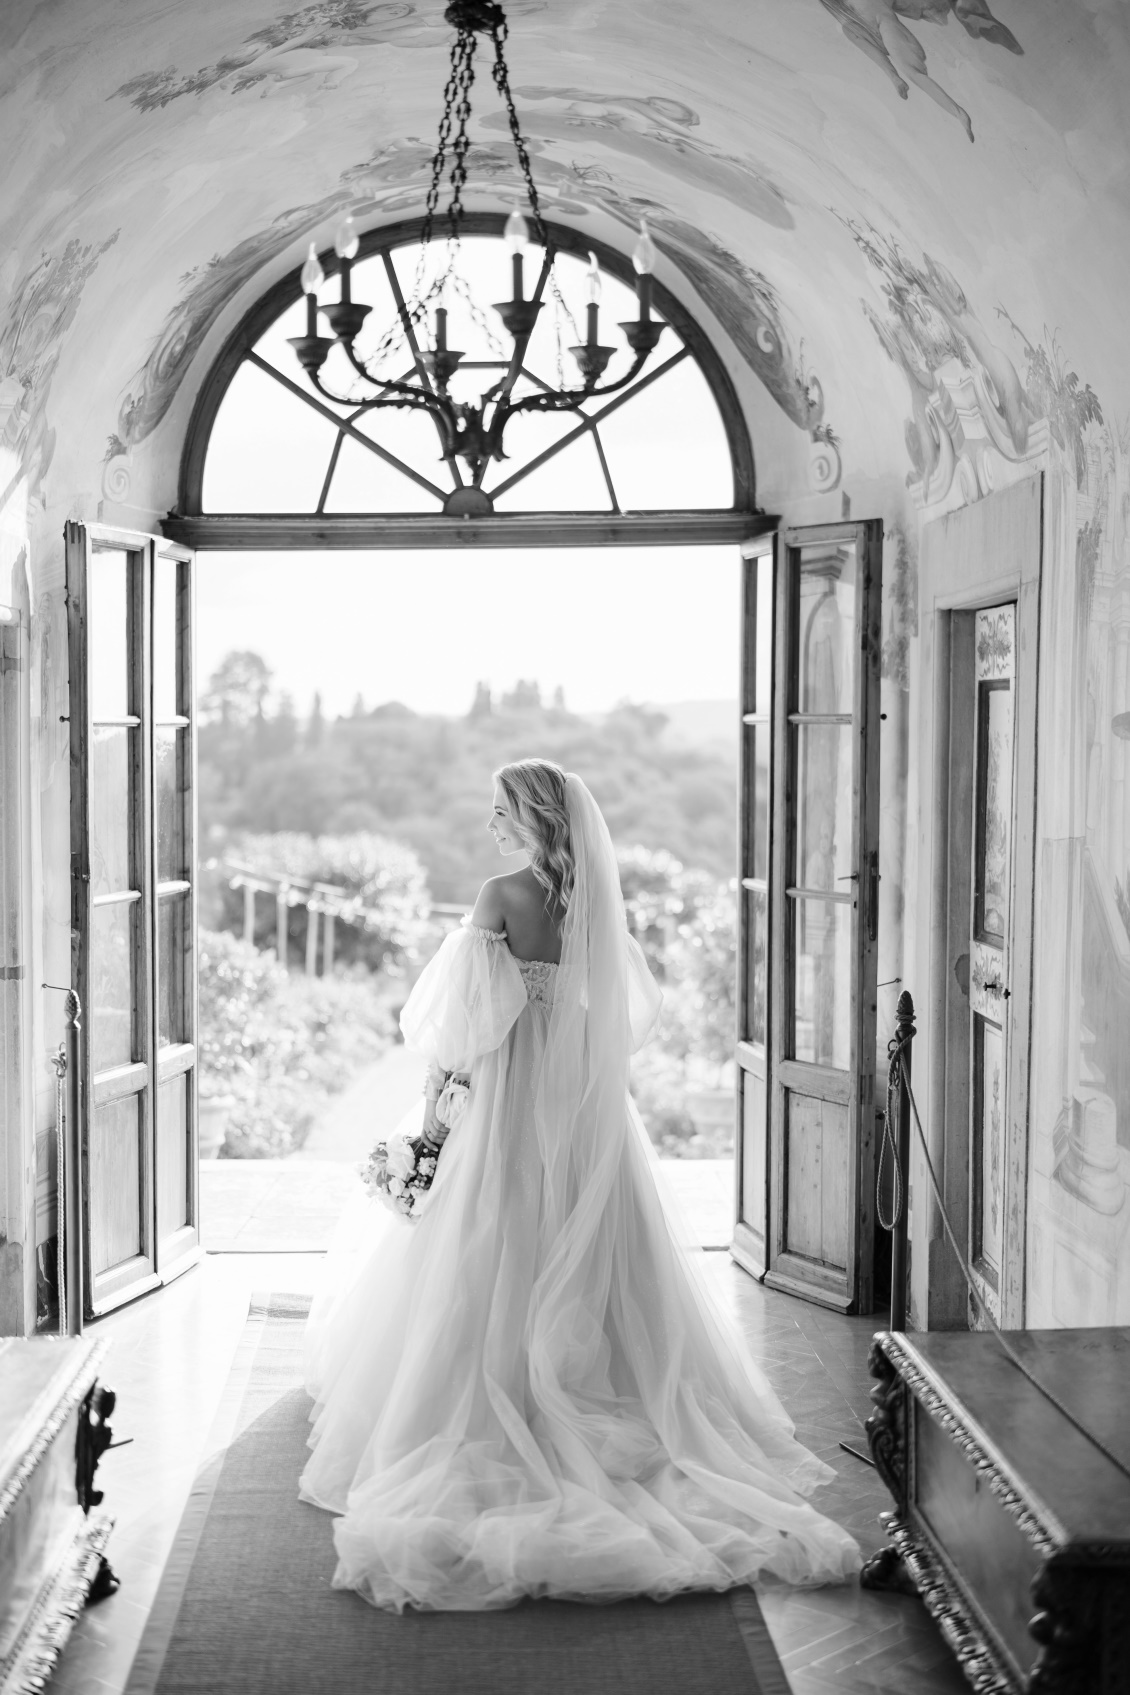 https://www.perfect-wedding.de/wp-content/uploads/2020/12/©nadtochiy-Shutterstock2-1.jpg